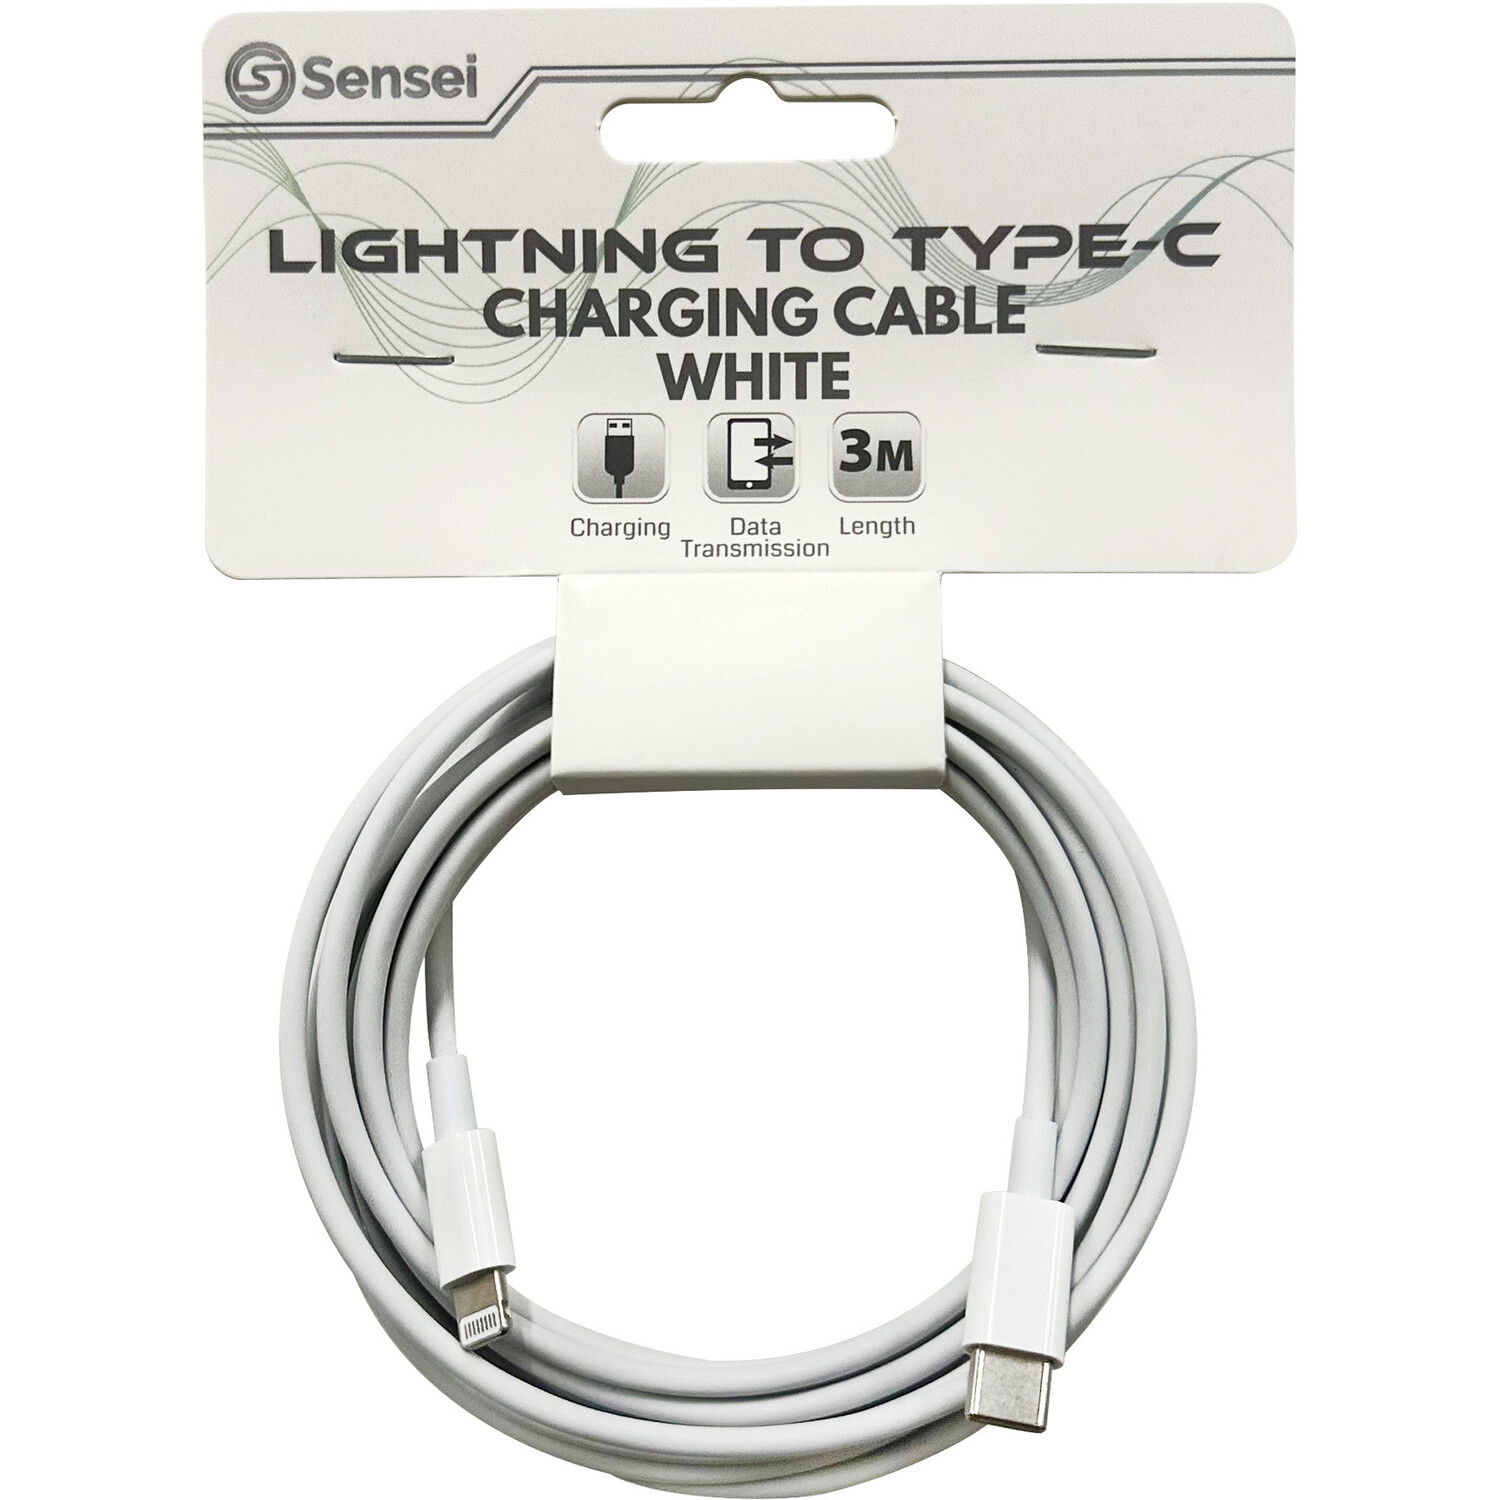 Sensei Lightning to Type C Charging Cable 3m Image